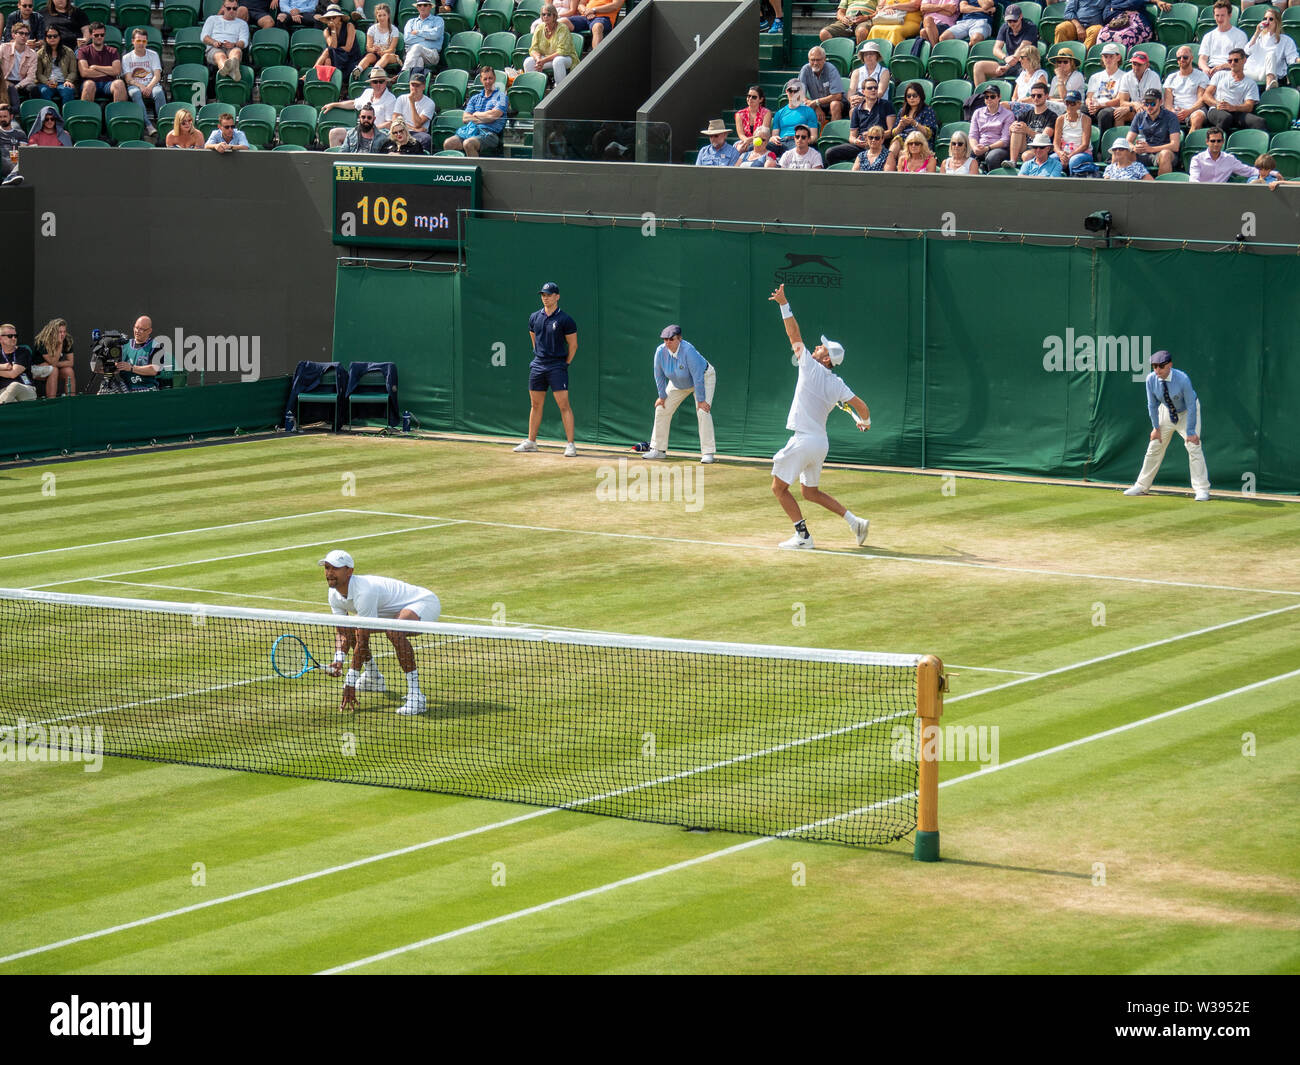 Torneo Di Tennis Di Londra Immagini e Fotos Stock - Alamy